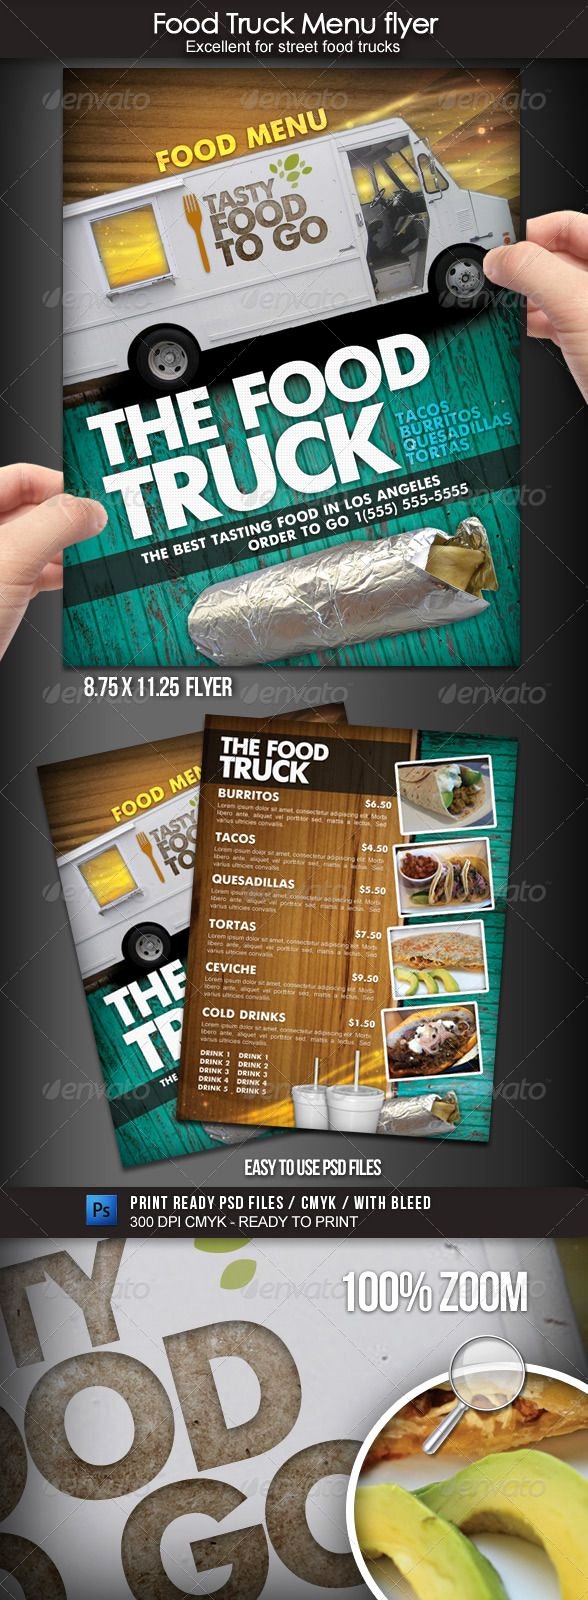 Food Truck Menu Template Beautiful Food Truck Menu Flyer